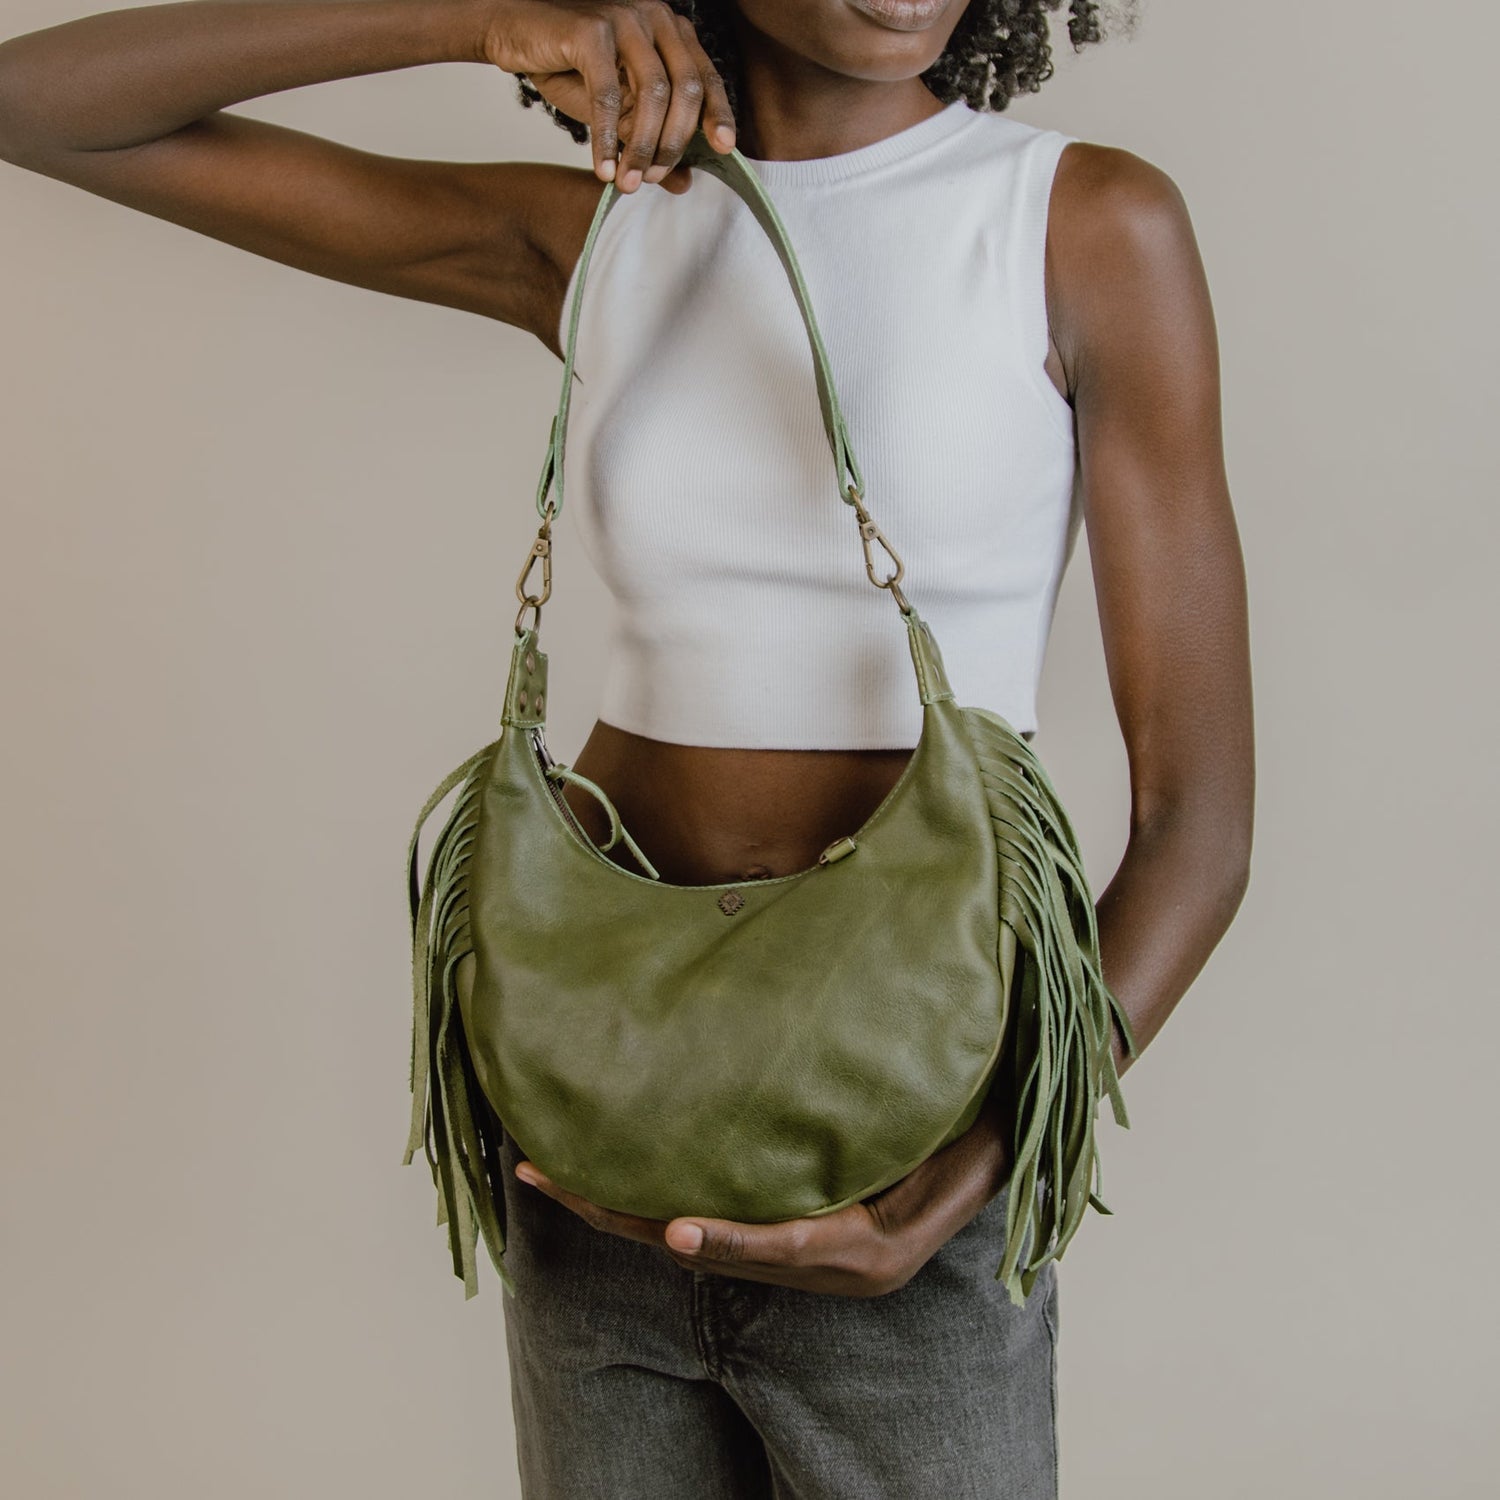 Boho Saddle Bag with Fringe - Small - Artisan Collection - Full Leather - Deep Emerald